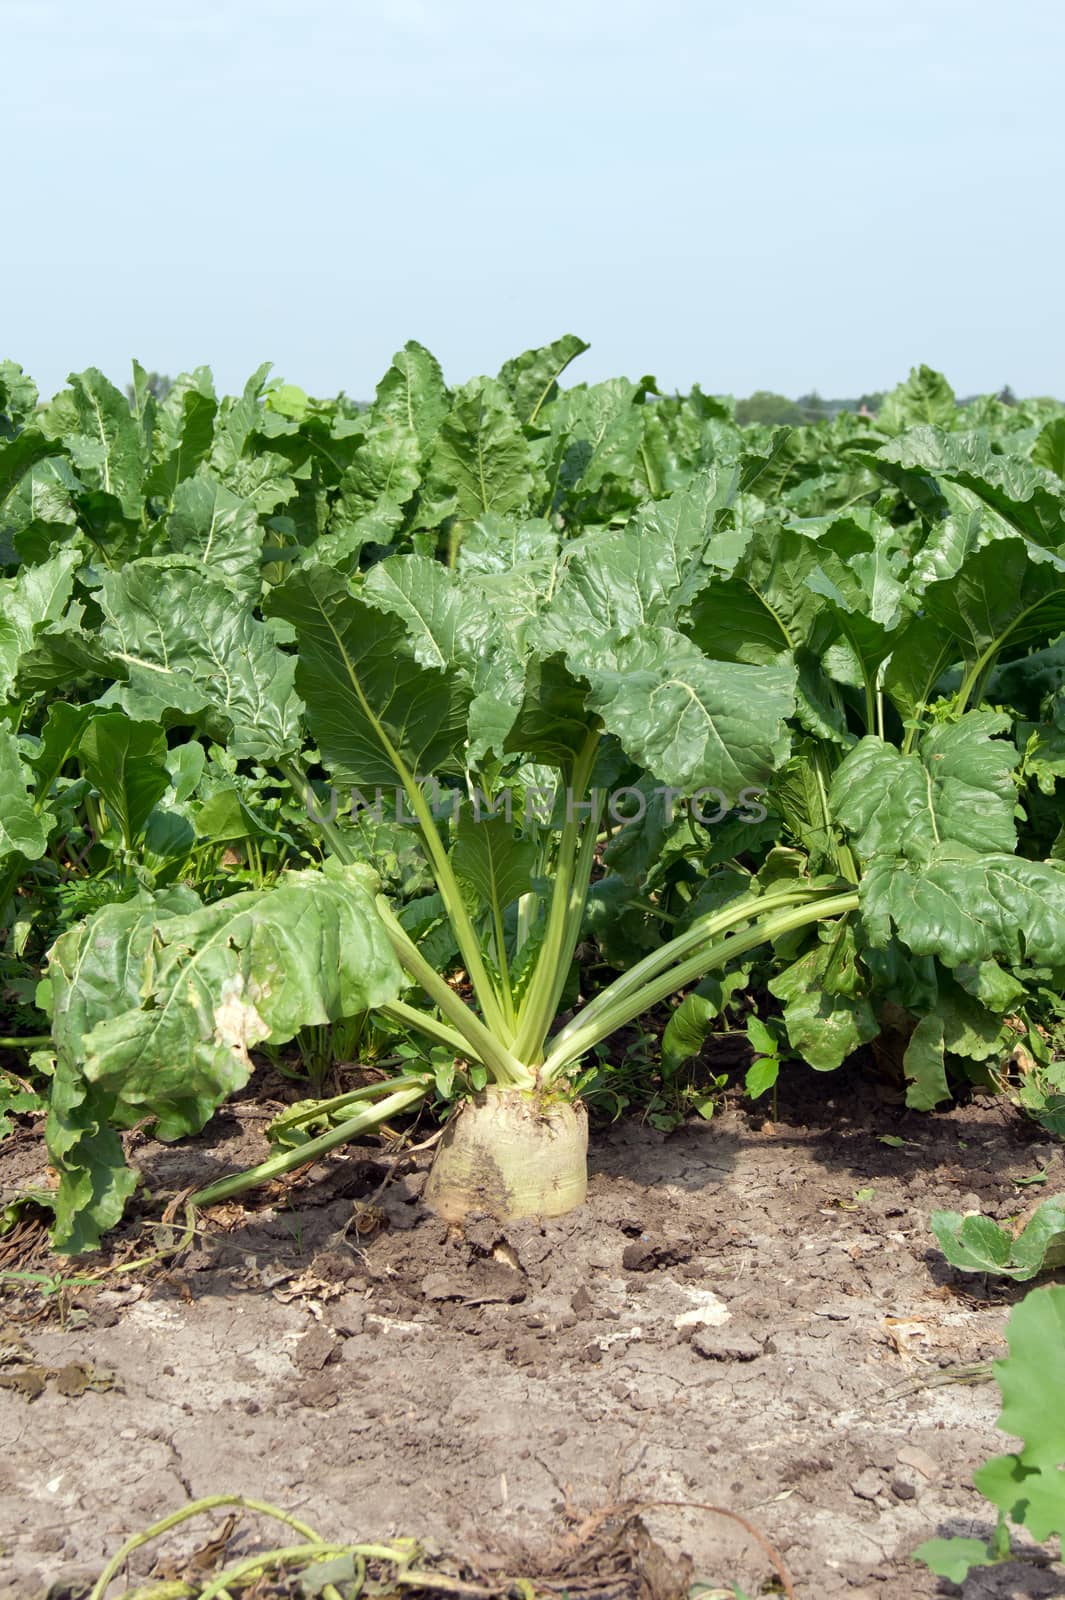 Sugar beet (Beta vulgaris) are important crops.